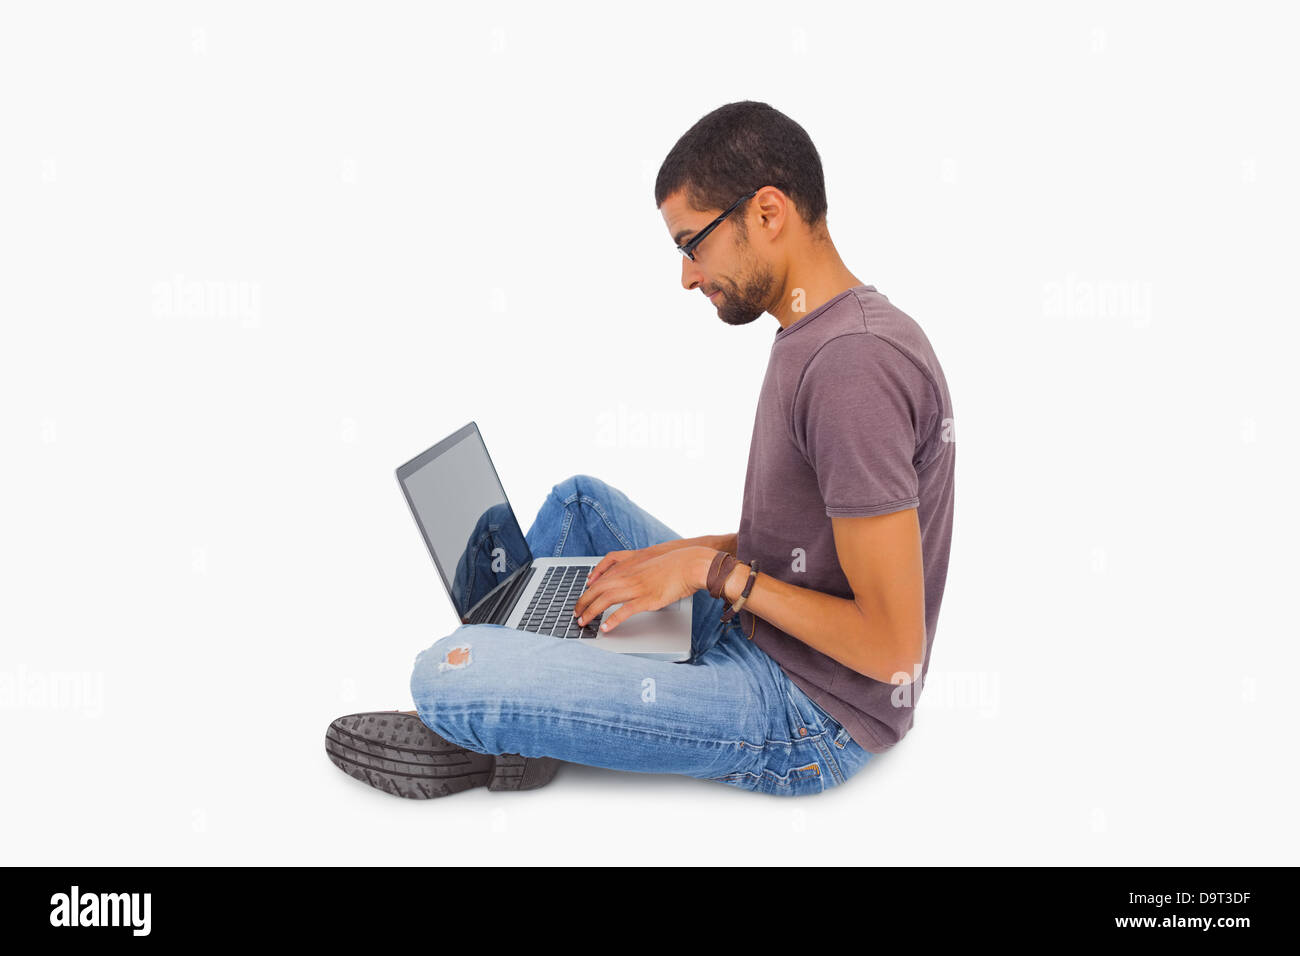 Man wearing glasses sitting on floor using laptop Stock Photo